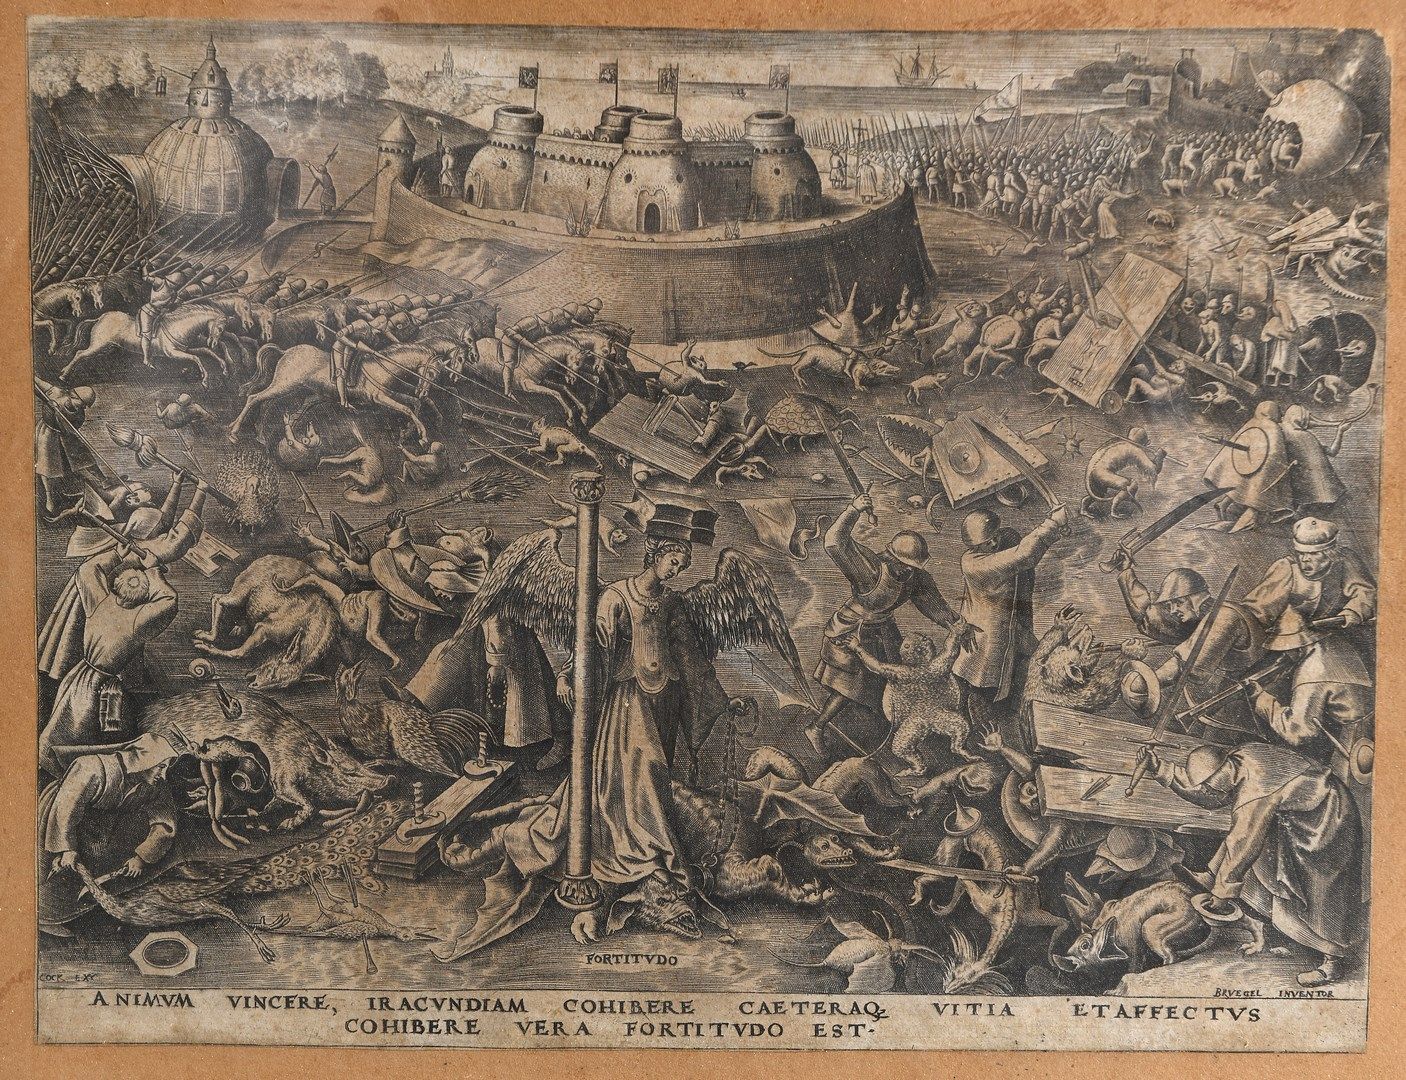 Null Peter BRUEGHEL (c.1525-c.1569)

FORTITUDO

Planche de la série des Sept Ver&hellip;